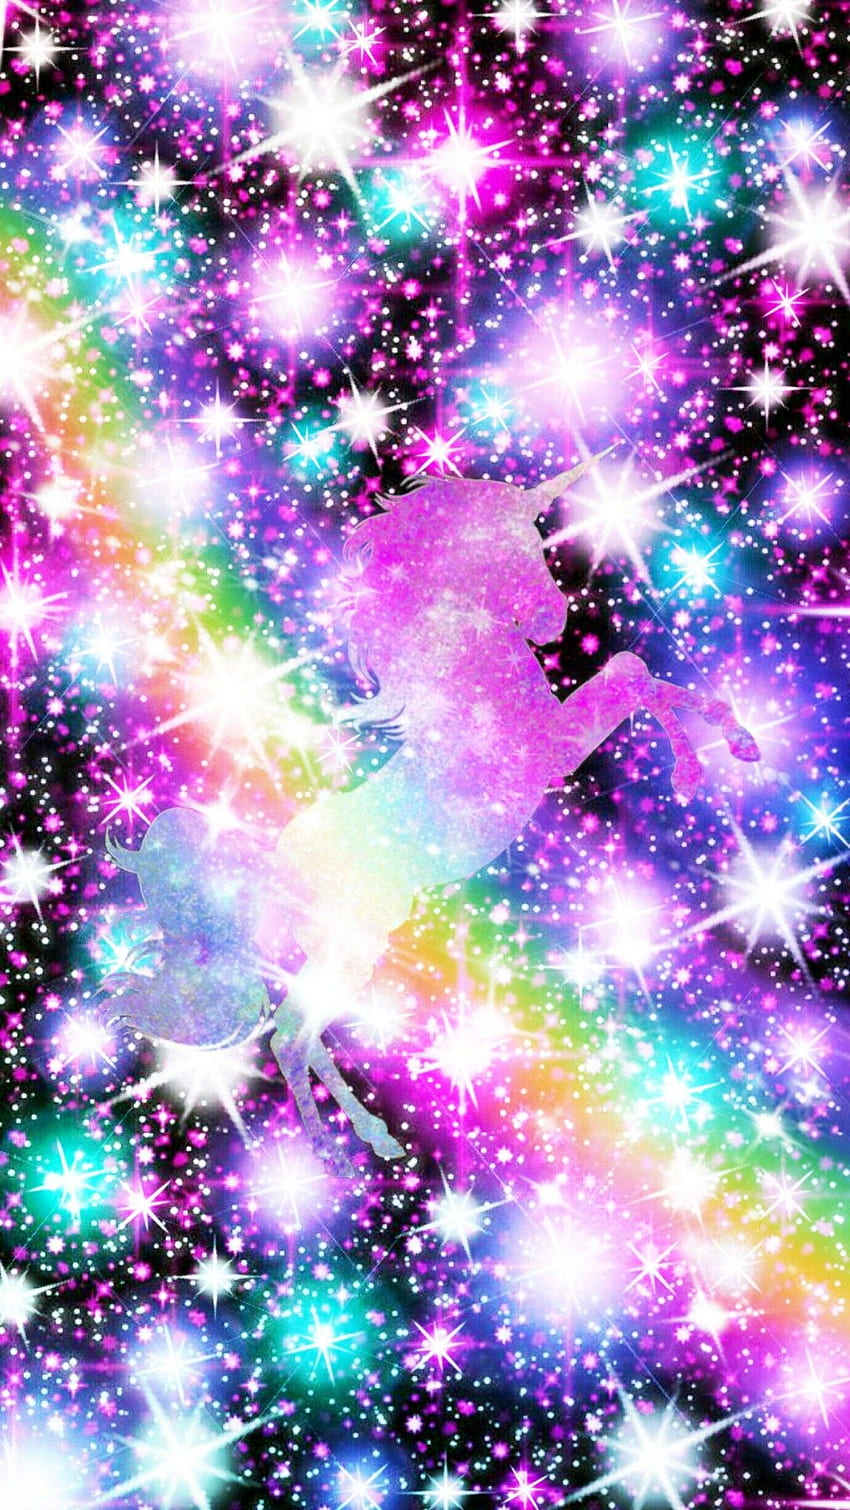 Free Galaxy Rainbow Wallpaper - Download in JPG | Template.net